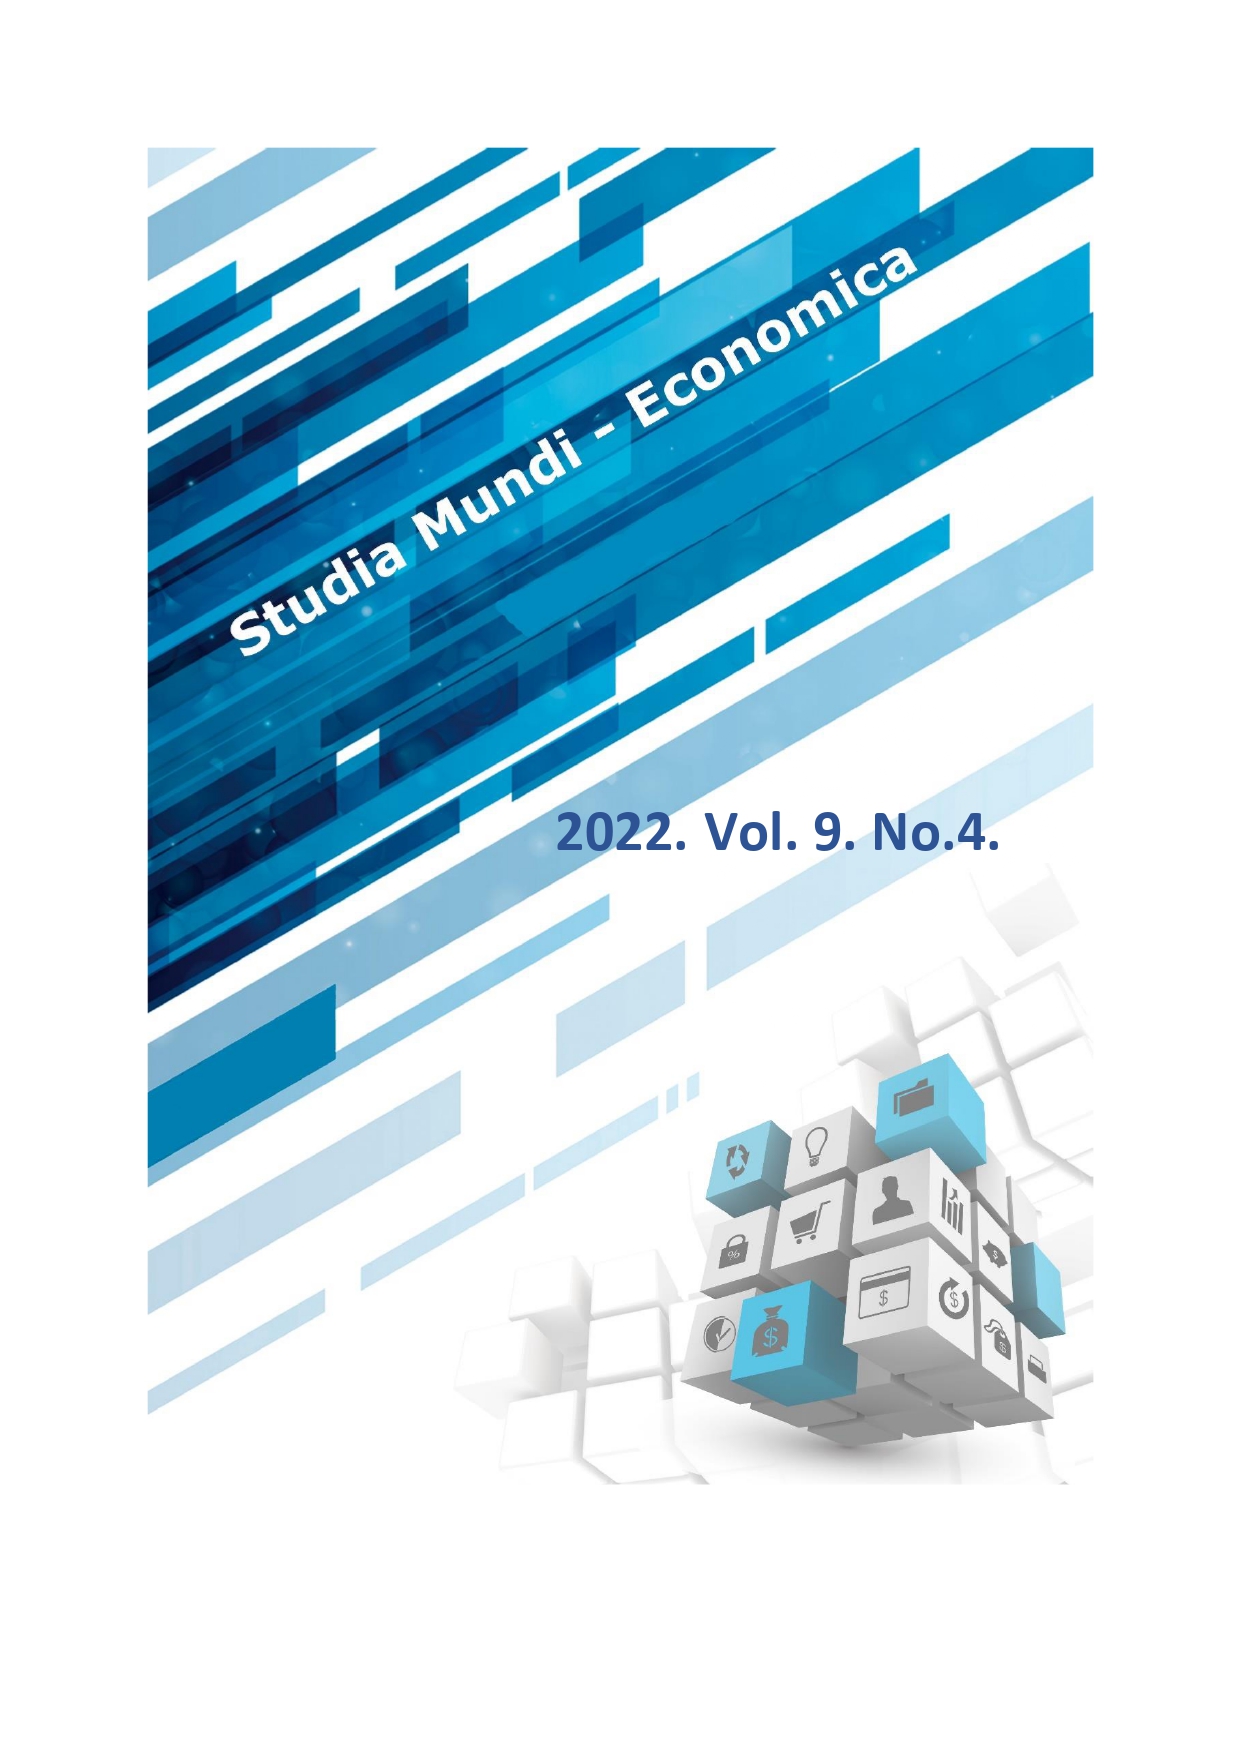 					View Évf. 9 szám 4 (2022): Studia Mundi – Economica
				